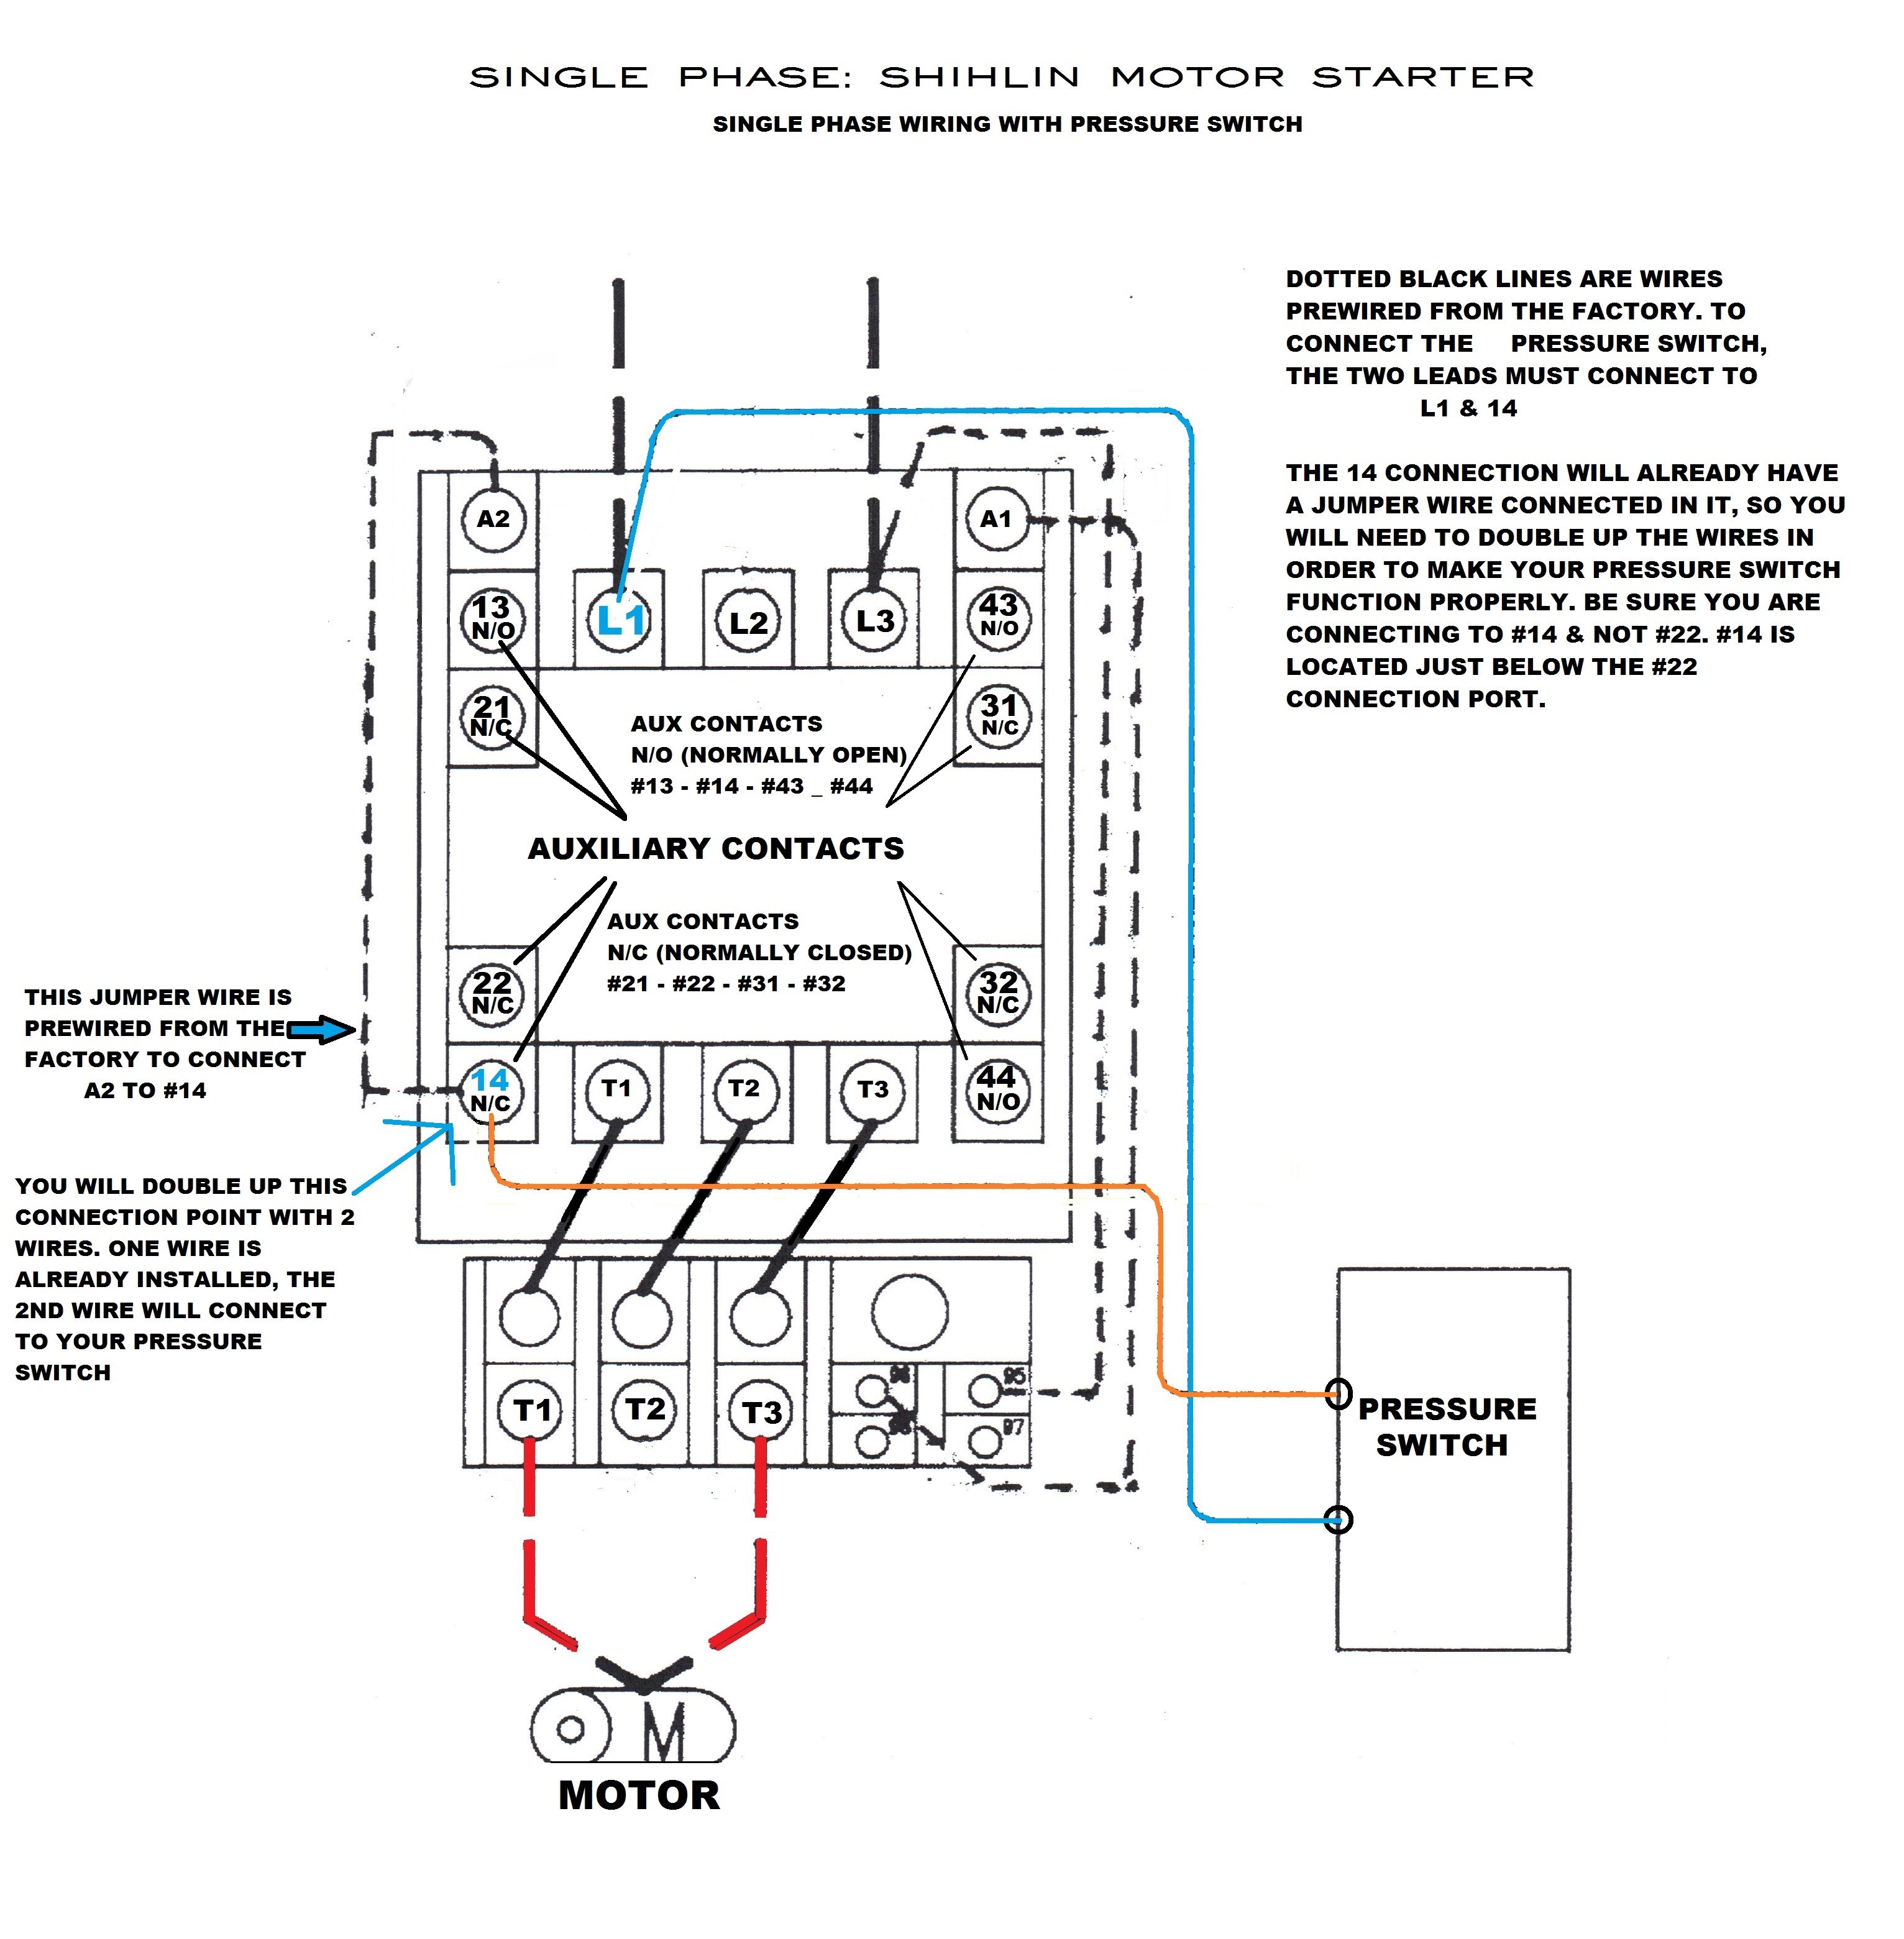 Air pressor Wiring Diagram